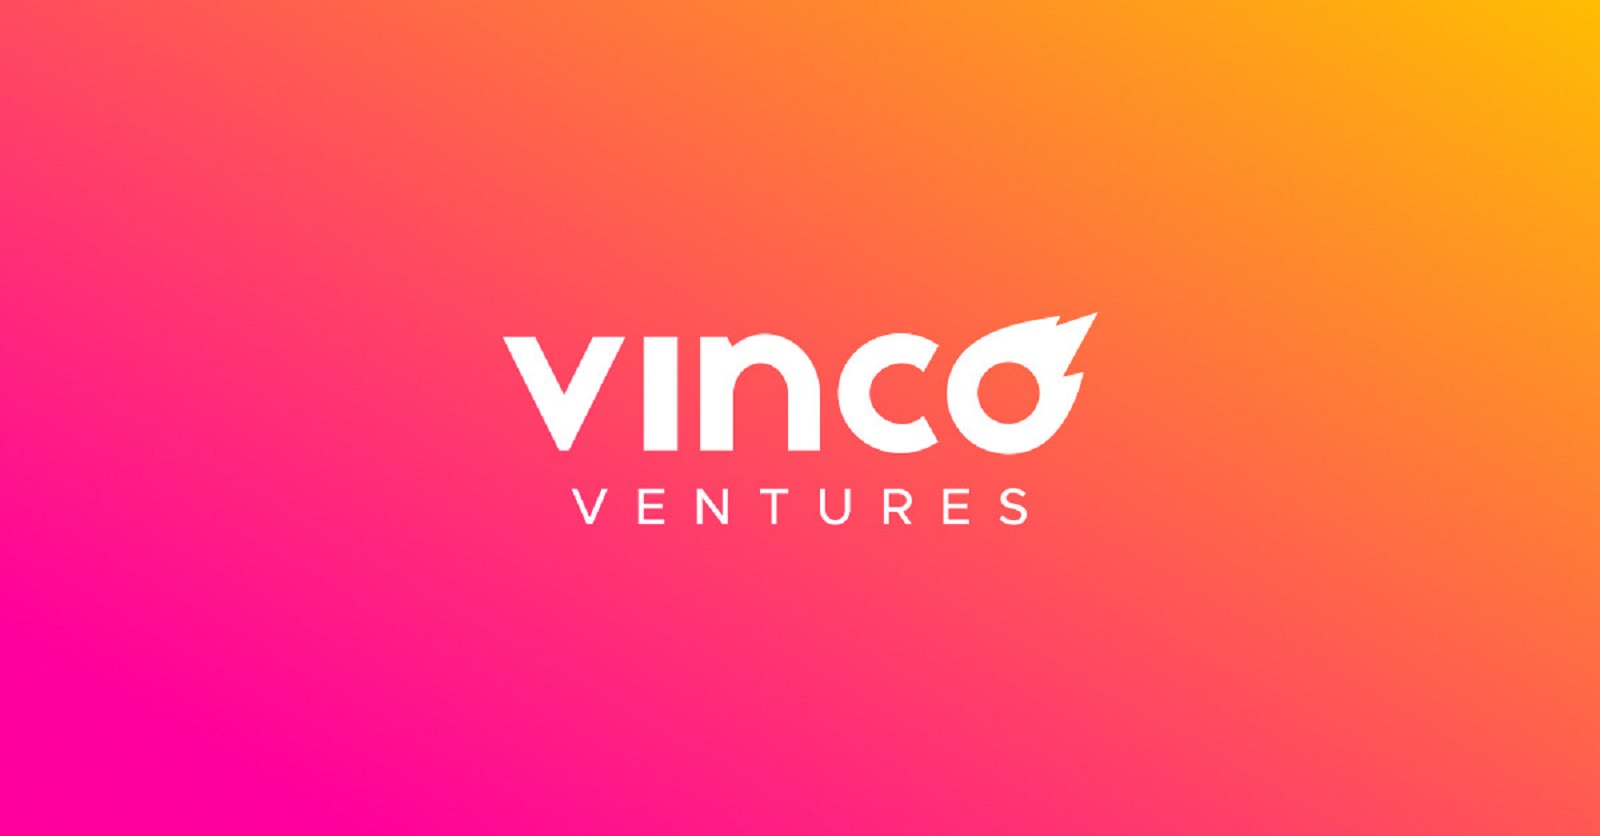 BBIG Stock. Vinco ventures (BBIG) logo on an orange/red background